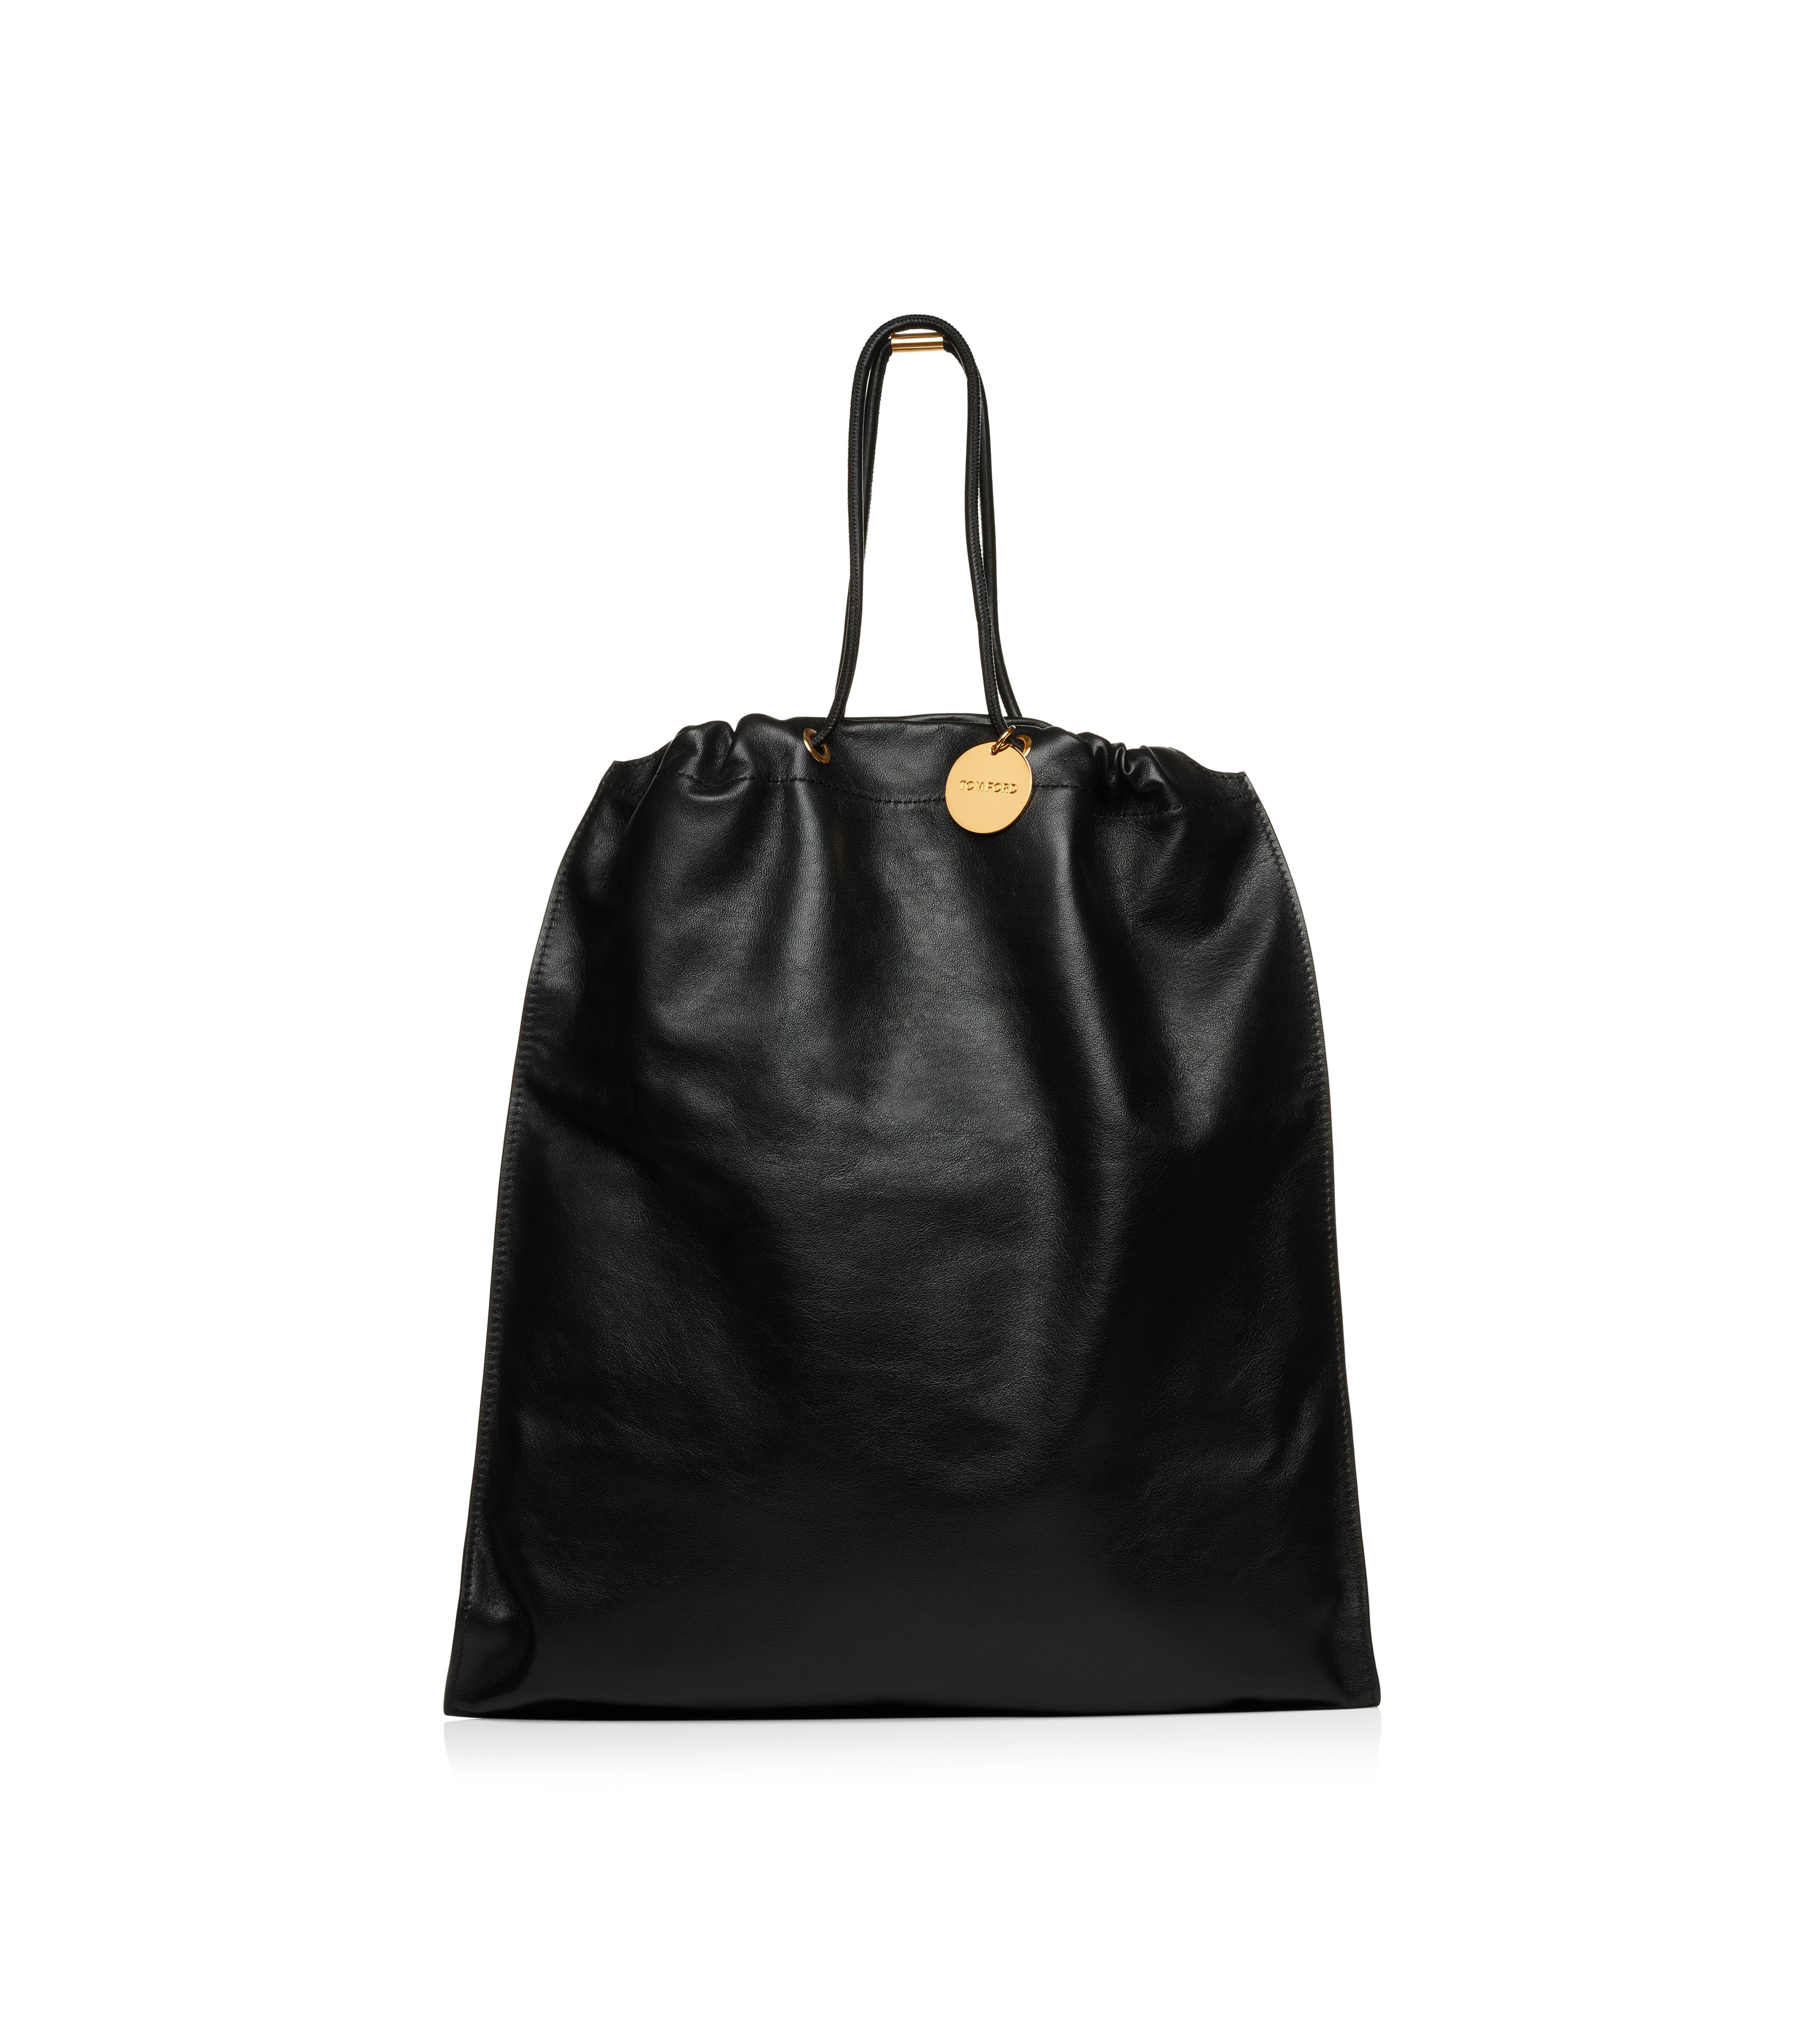 Totes - Handbags by TOM FORD - Designer Handbags | TOMFORD.com ...